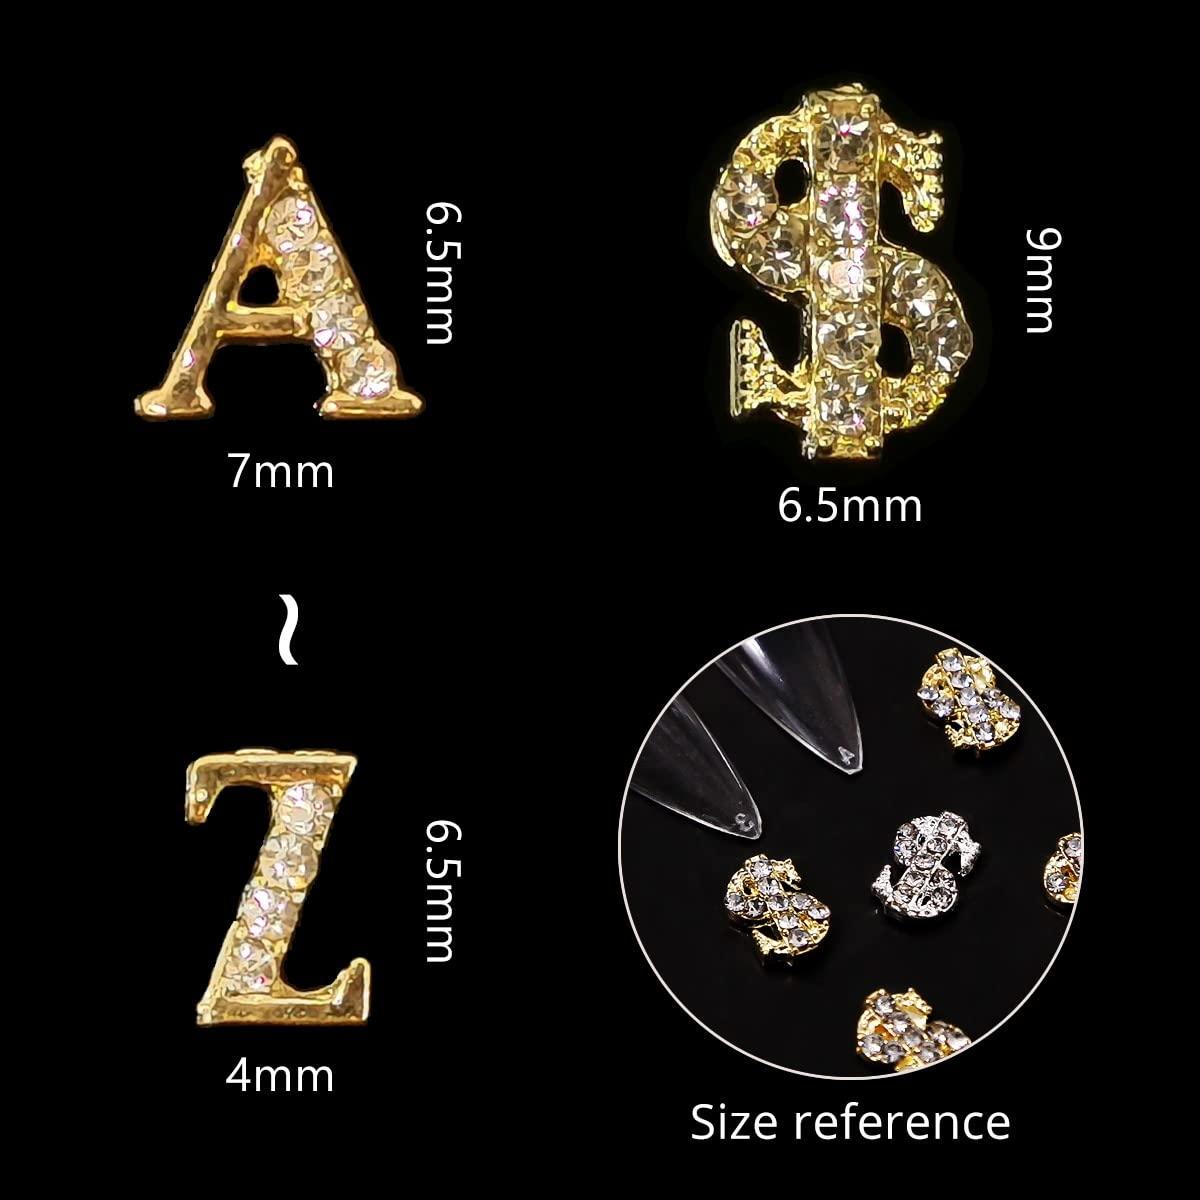 6 Gold Decorative Rhinestone Alphabet Letter Stickers DIY Crafts - E